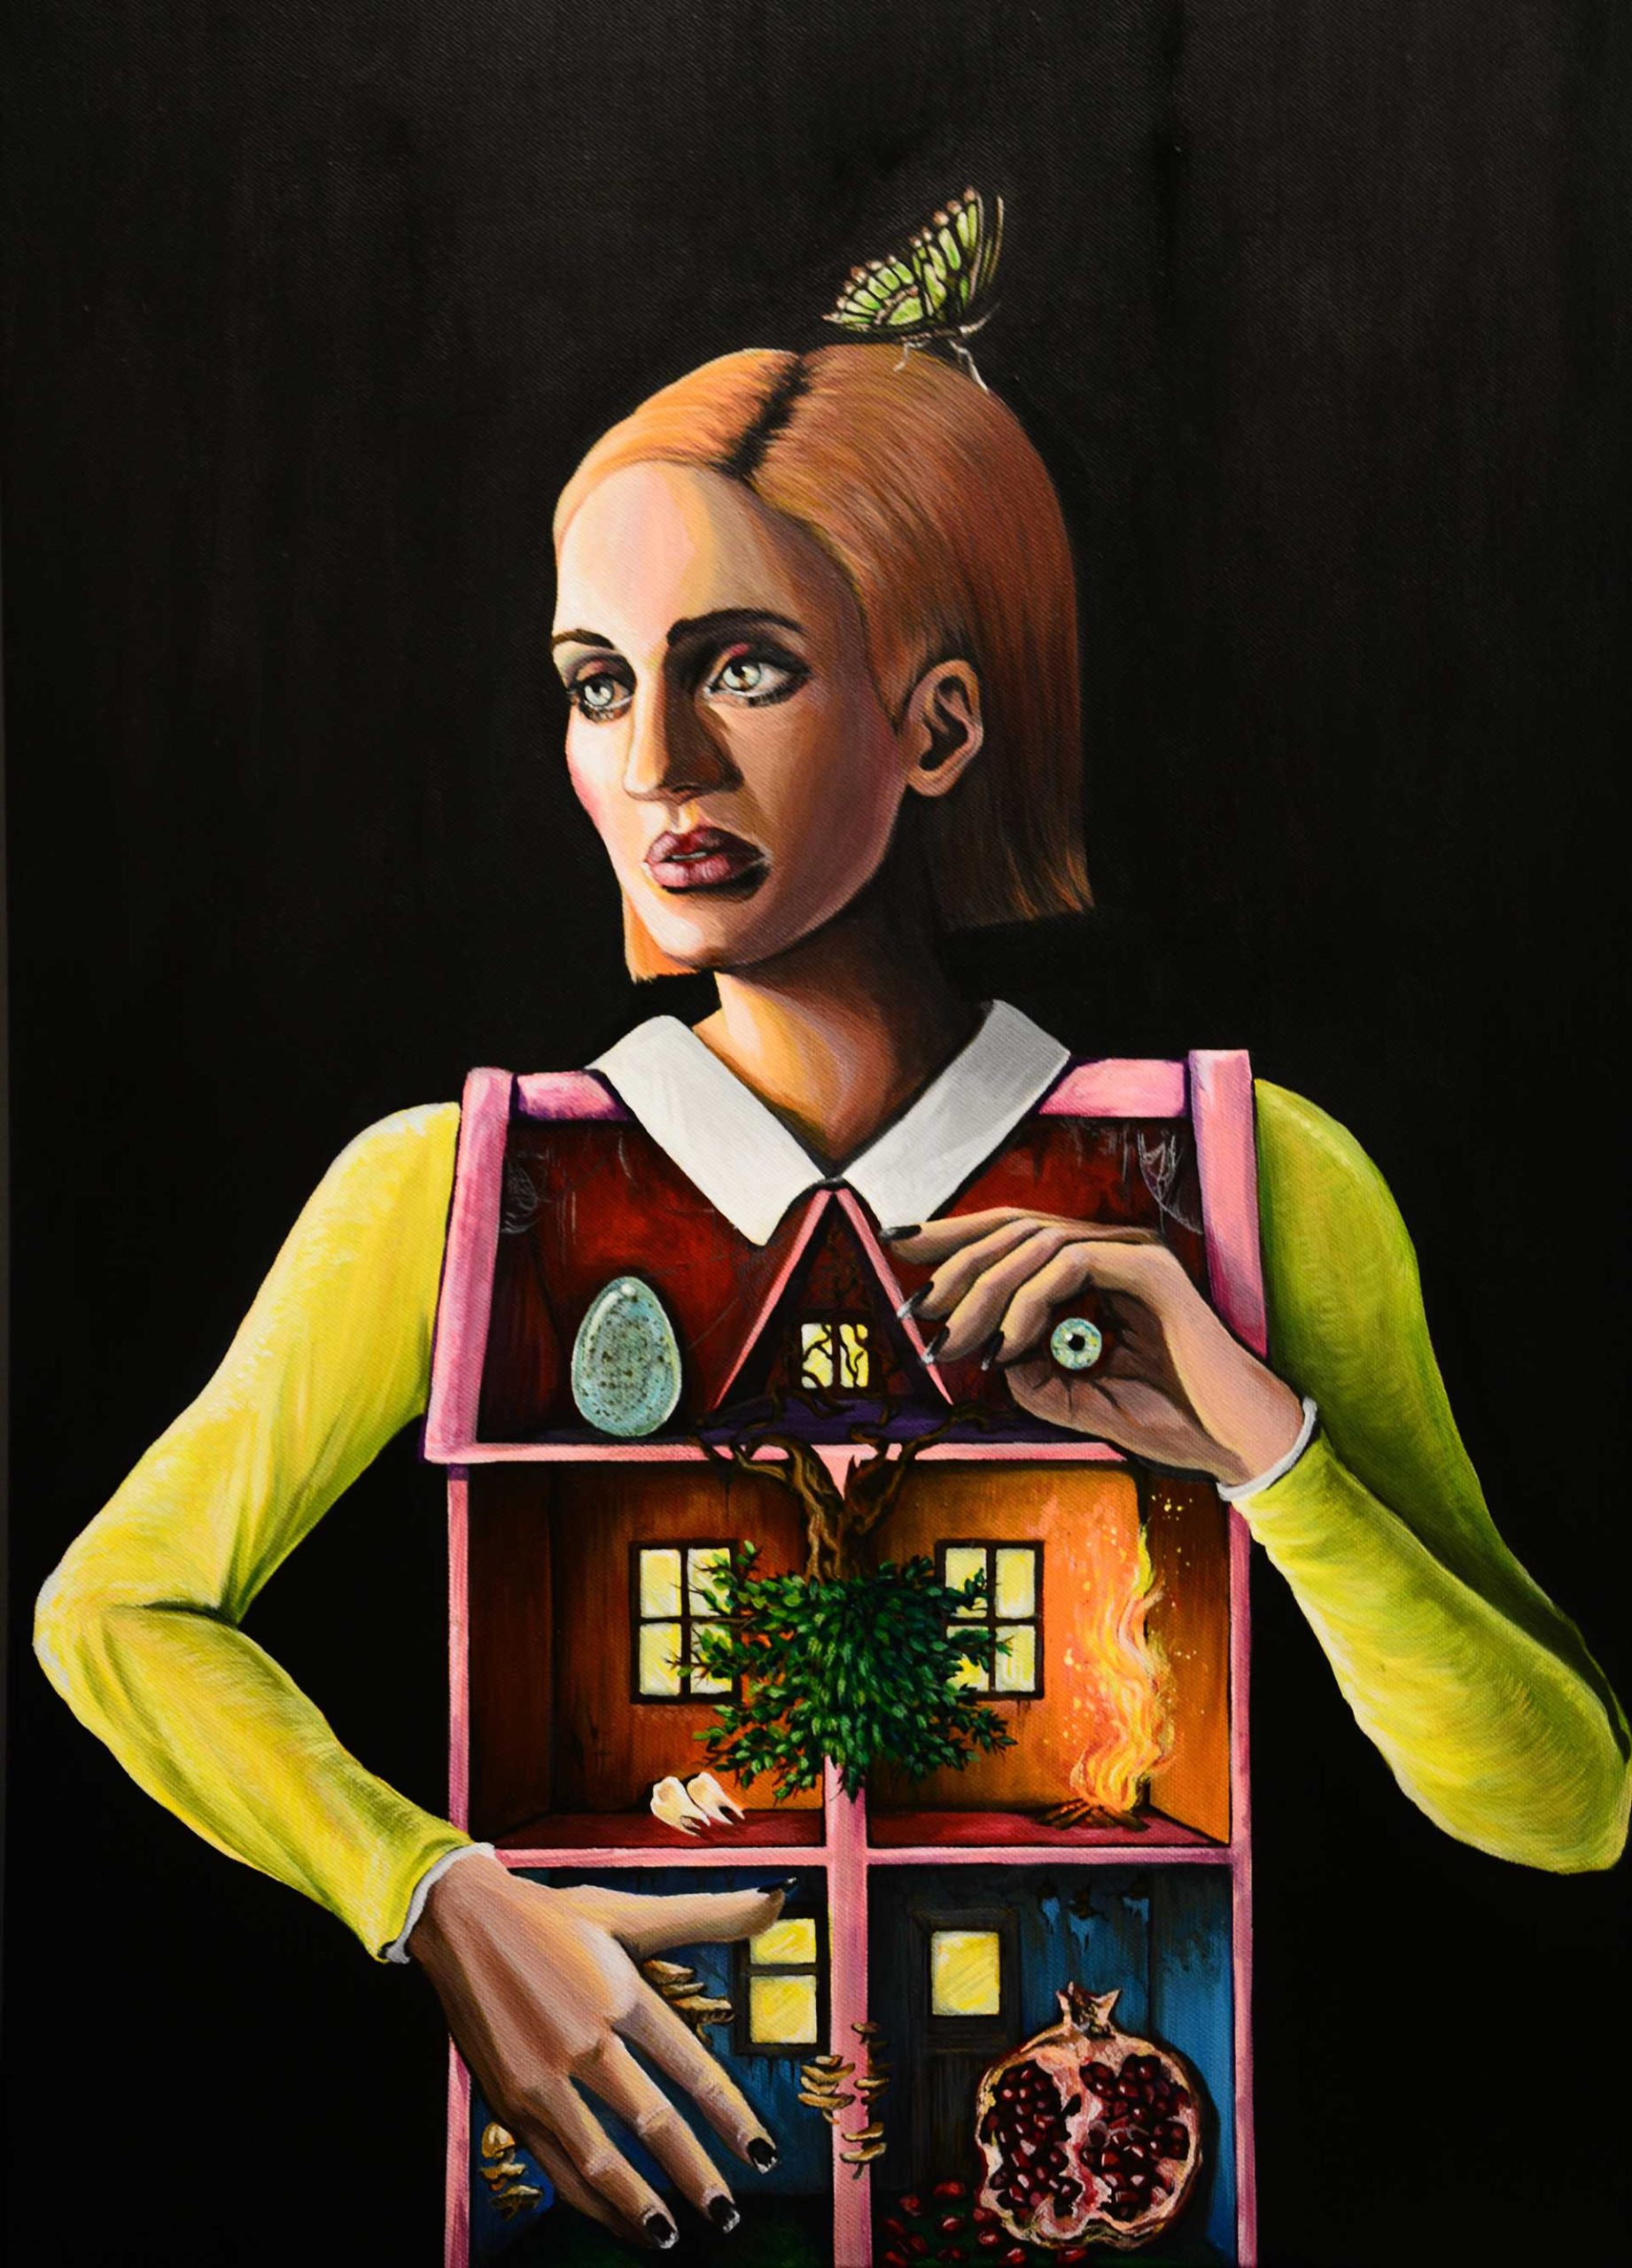 Eυγενία Γρυπάρη, ''I have a house inside my bones, where all the magic happens'', ακρυλικά σε καμβά, 70 x 50 cm